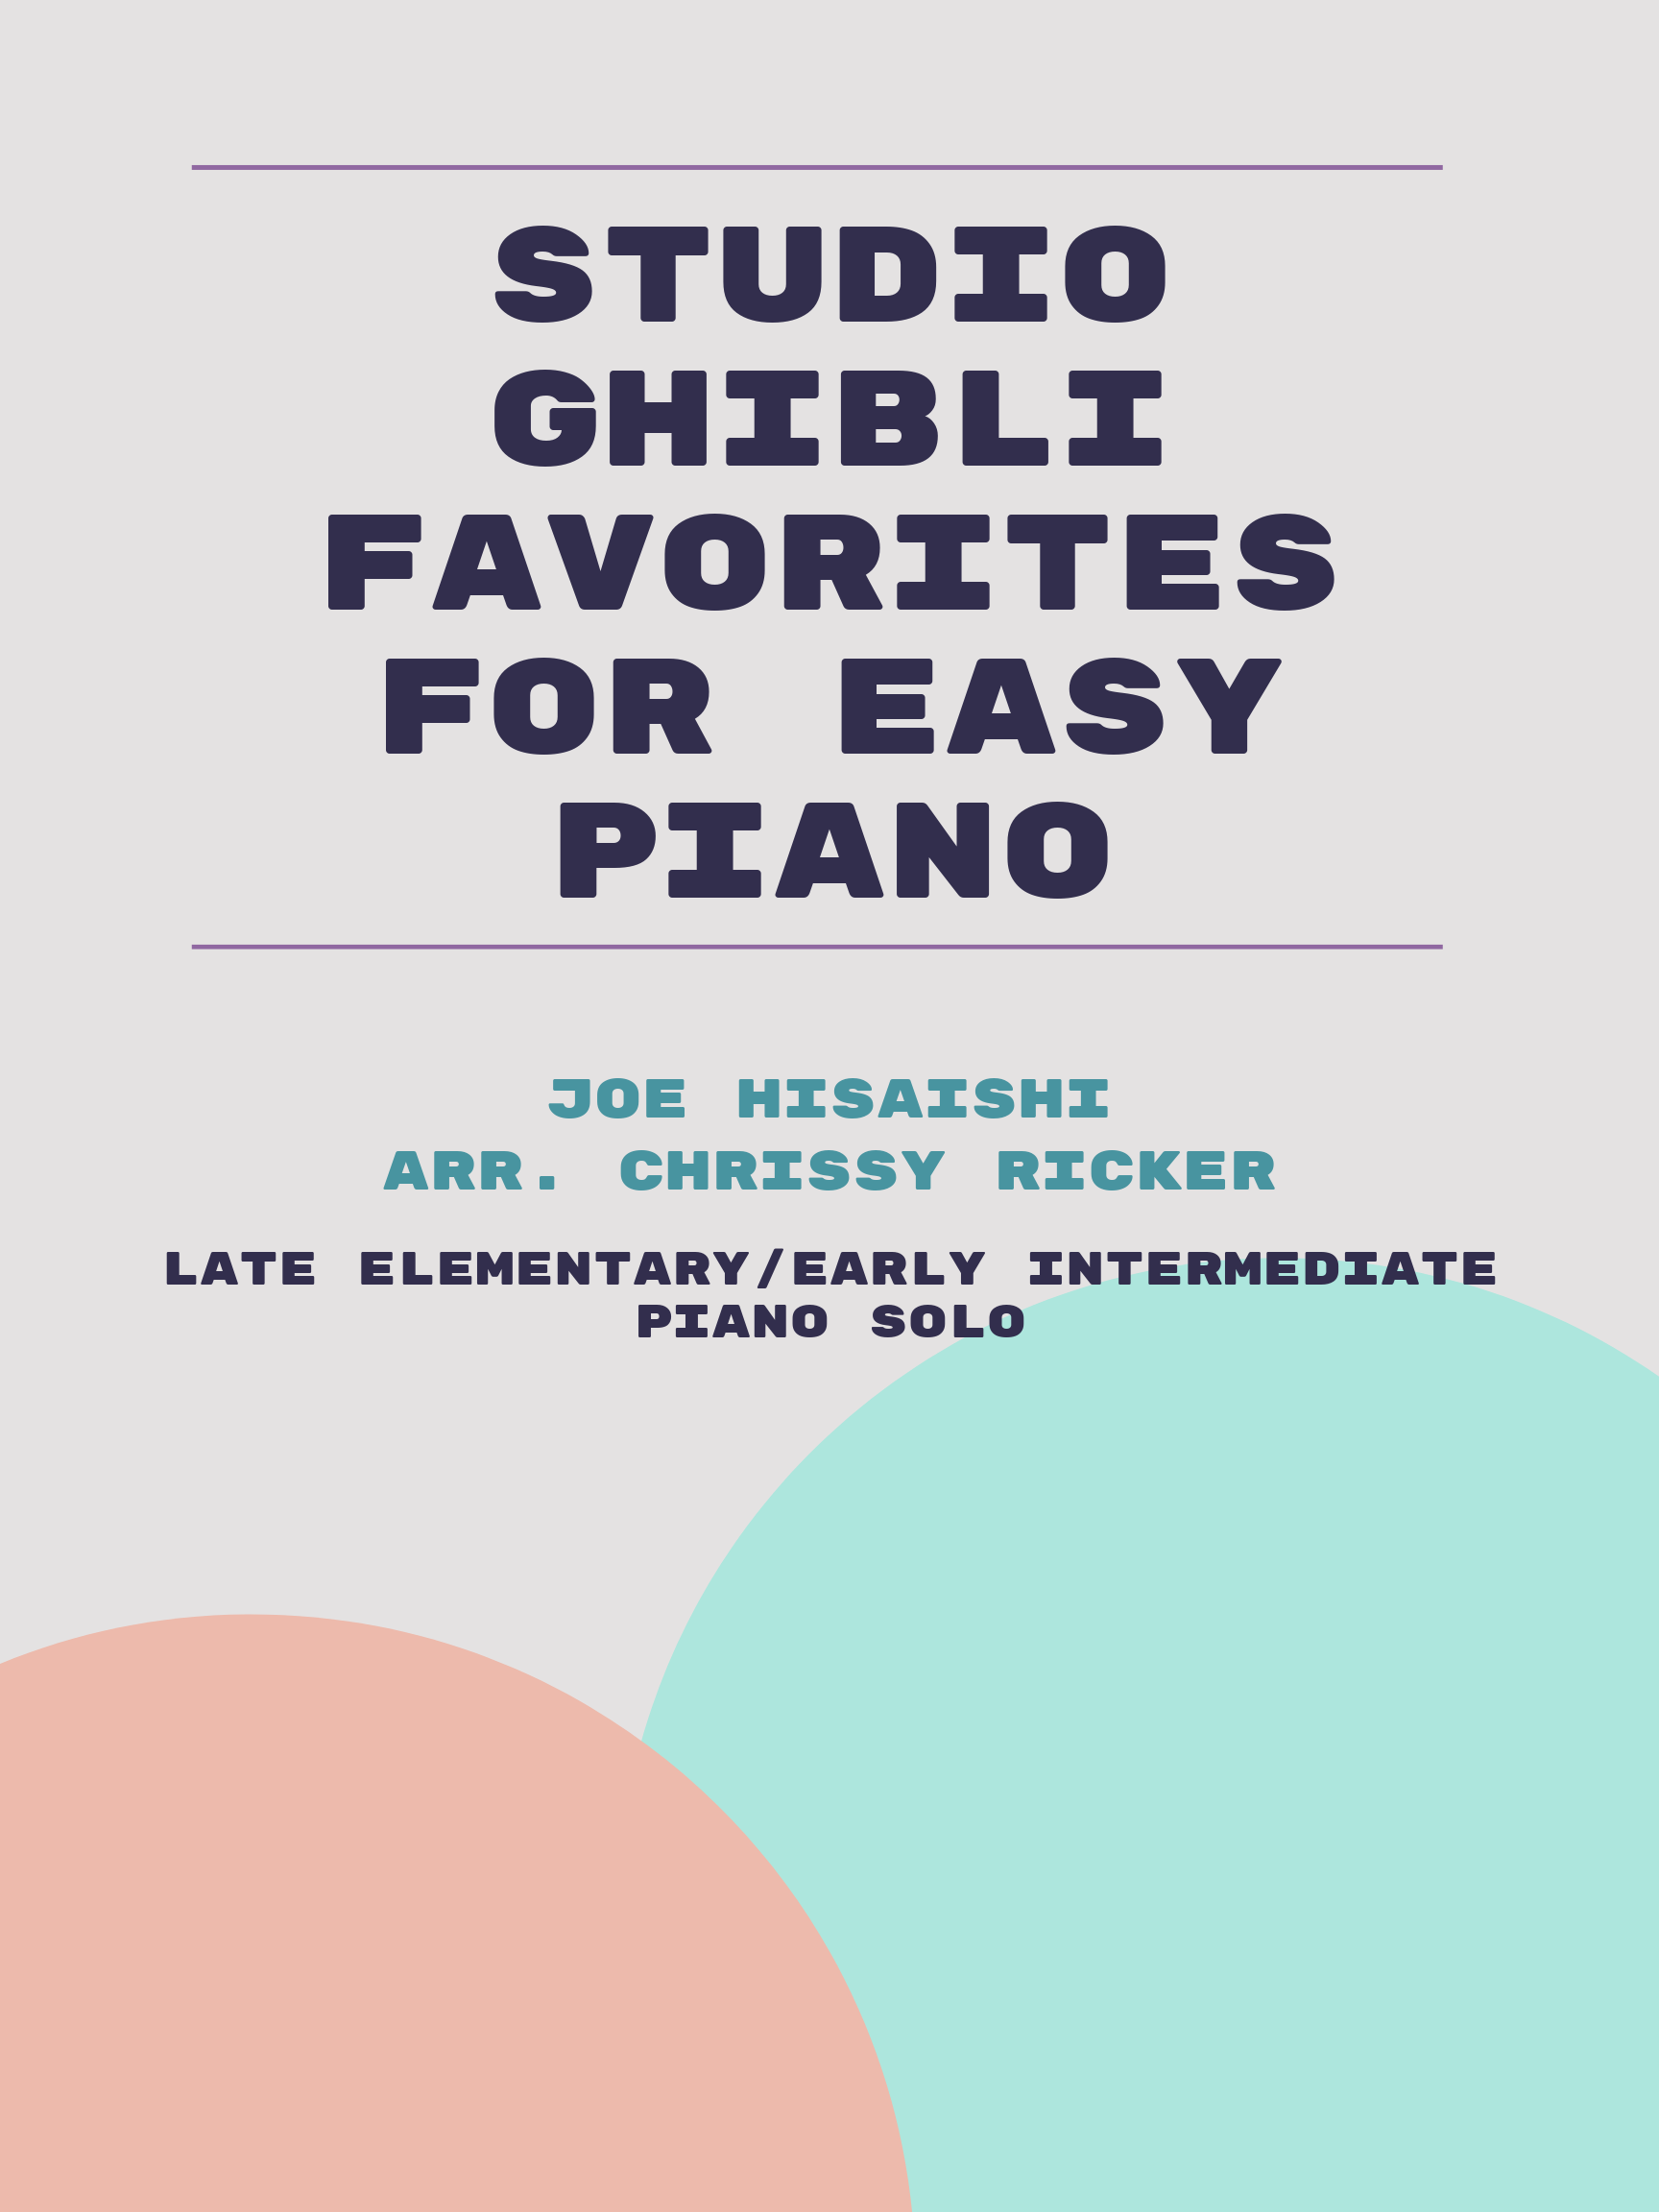 Studio Ghibli Favorites for Easy Piano by Joe Hisaishi